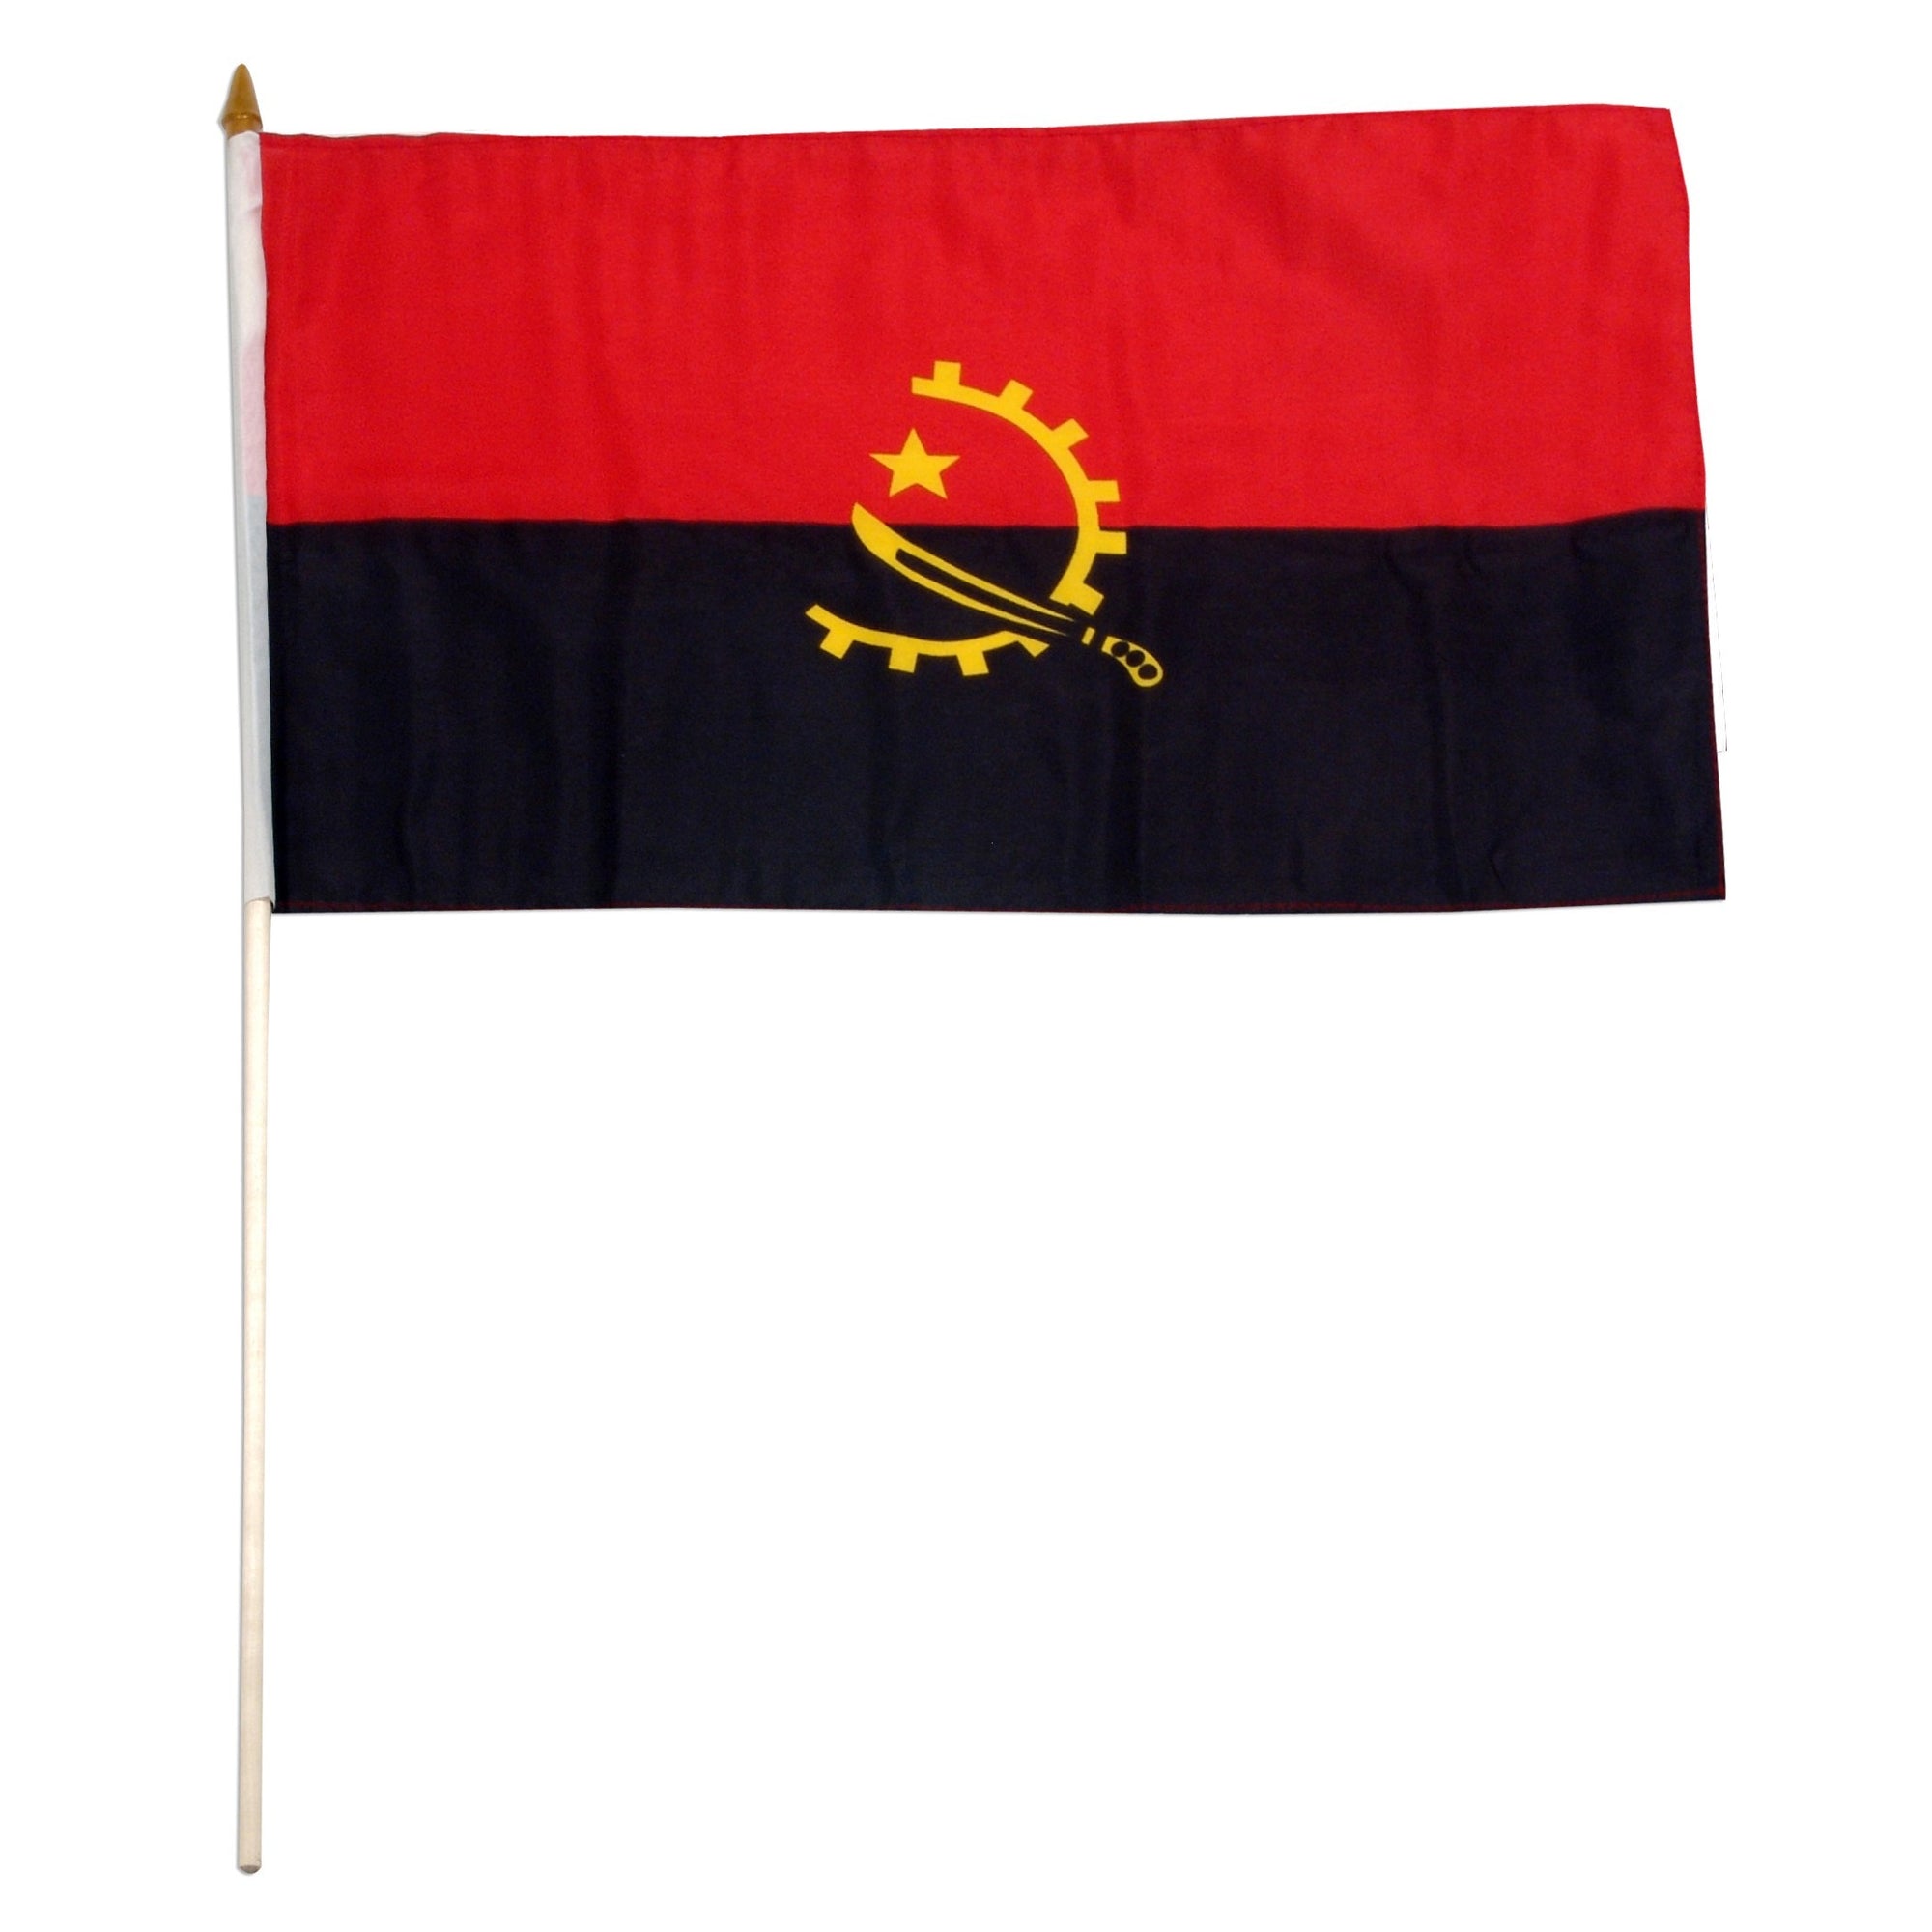 Angola 12" x 18" inch Mounted Country Angolan Flag